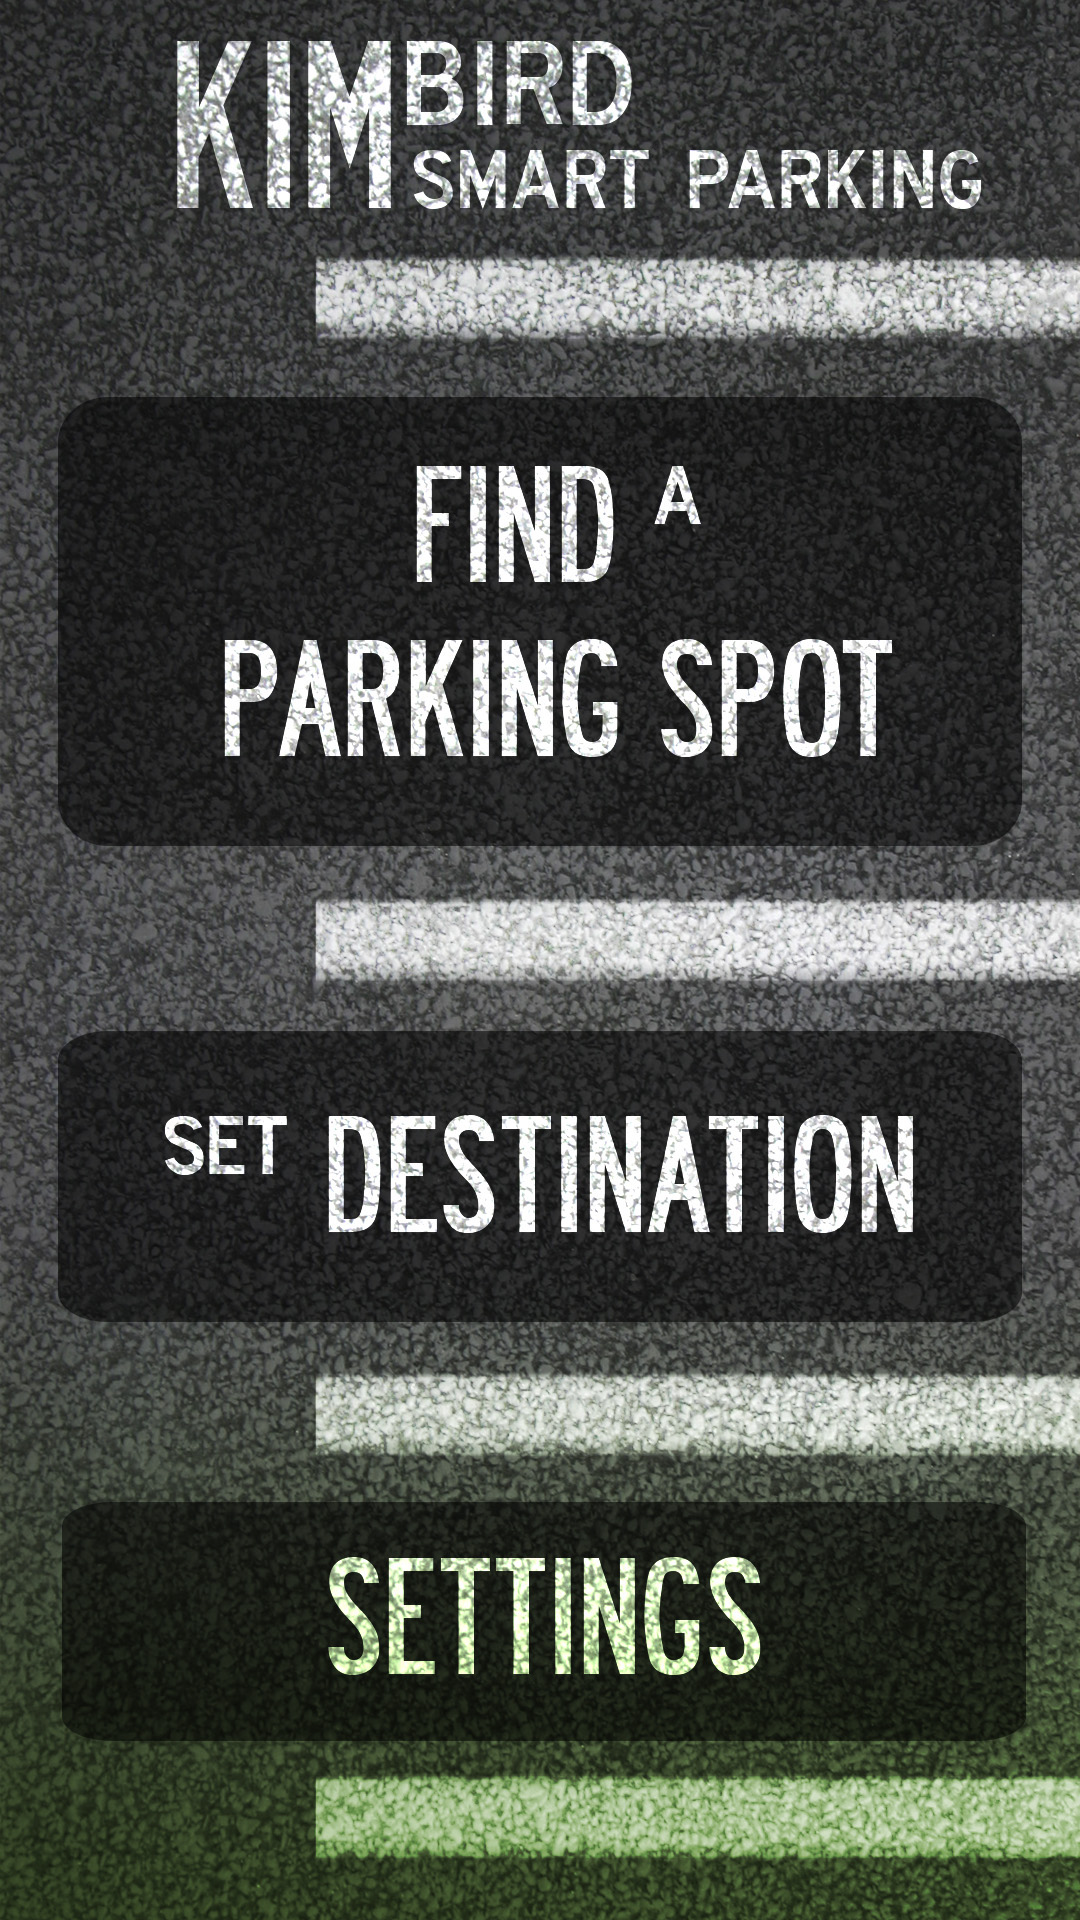 app Interface UI parking interaction congestion traffic